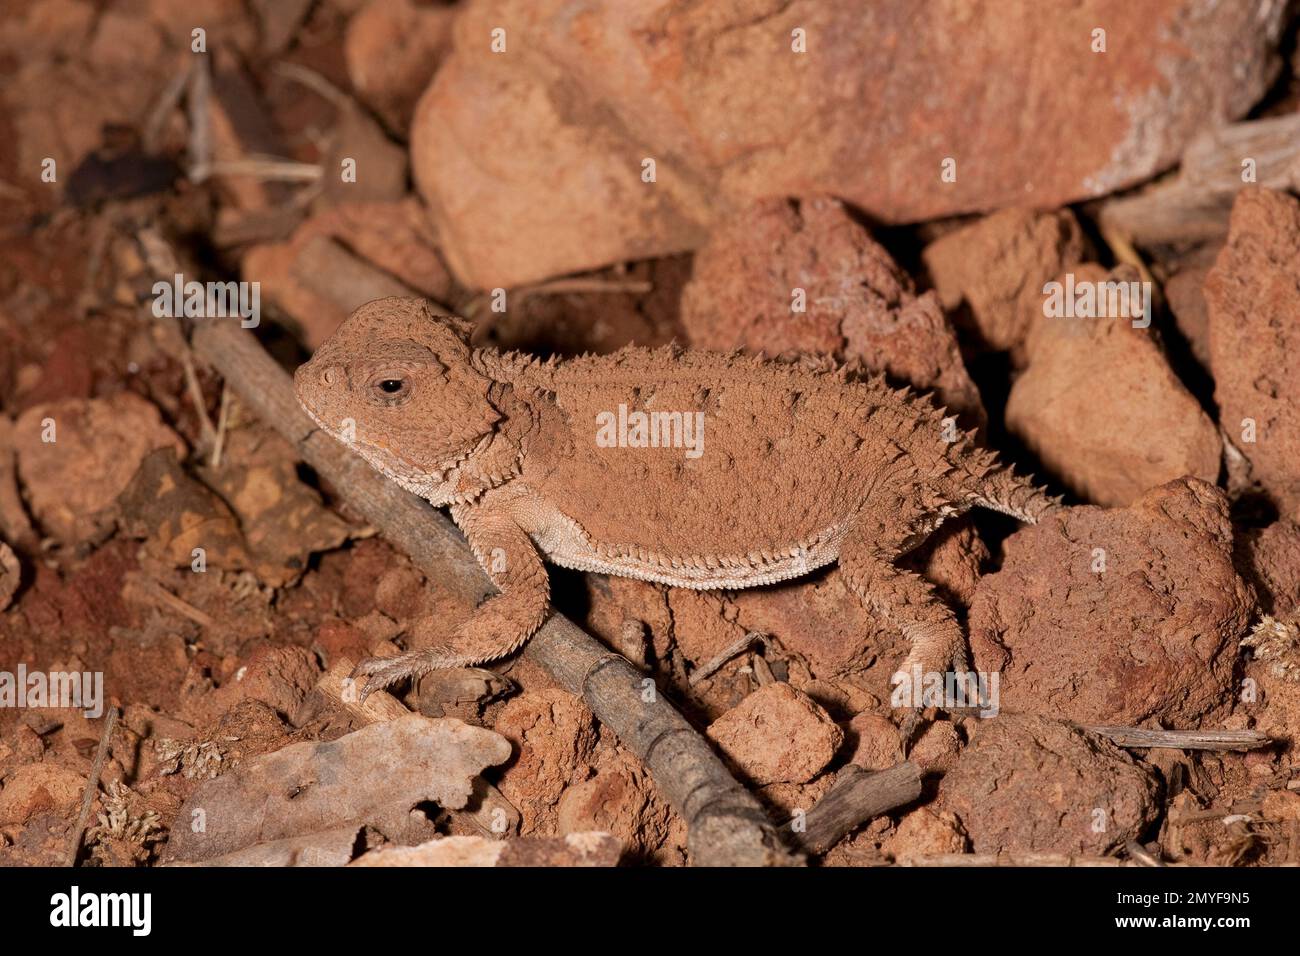 Lizard più grande a corna corta, Phrynosoma hernandesi. Lunghezza 64 mm. Foto Stock